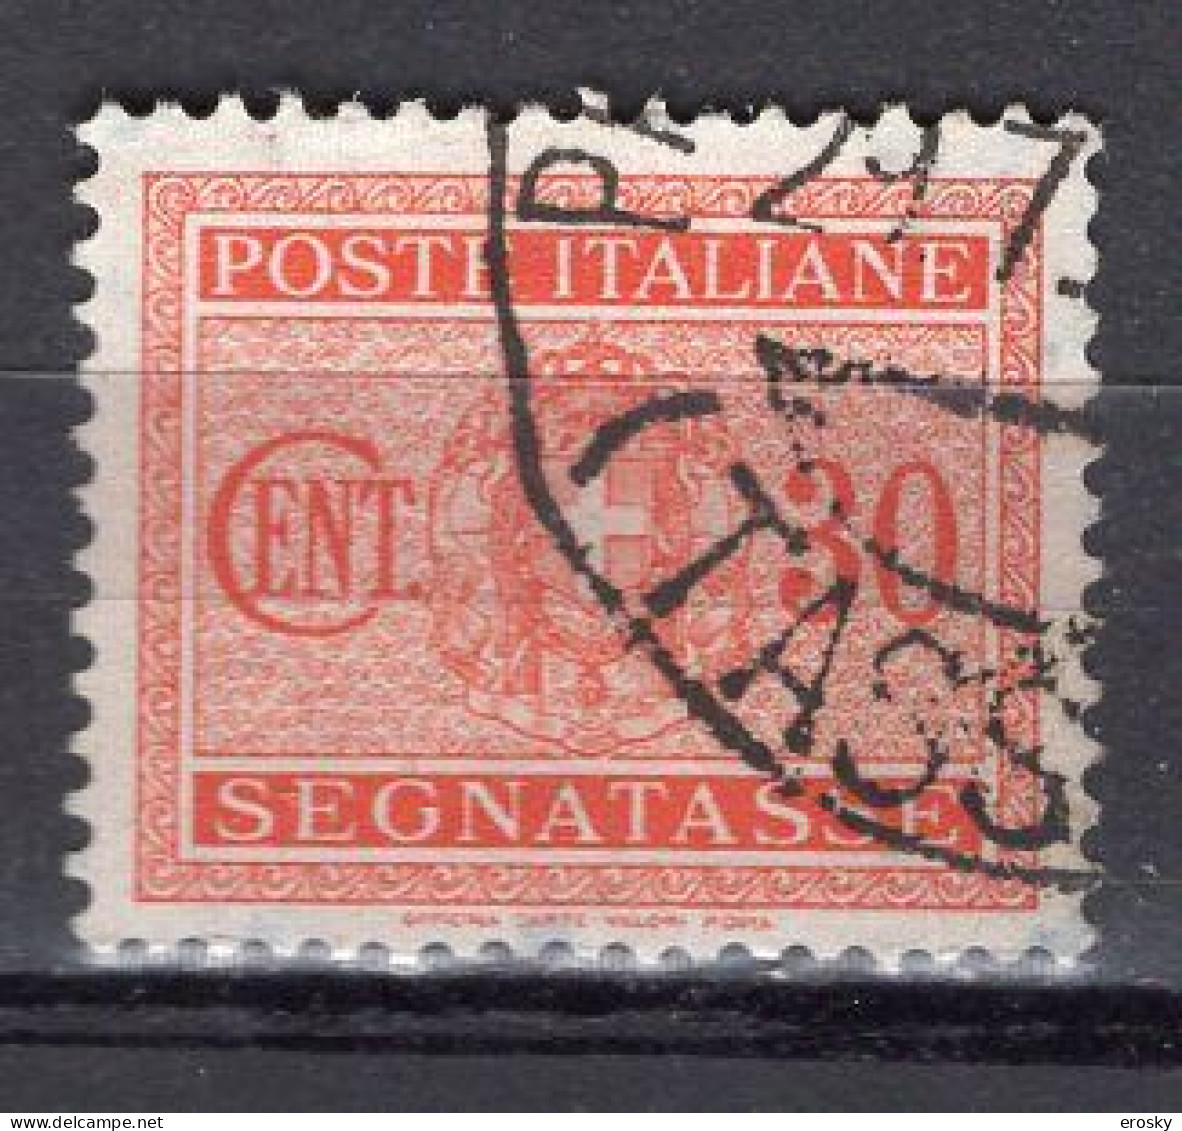 Z6179 - ITALIA REGNO TASSE SASSONE N°38 - Portomarken